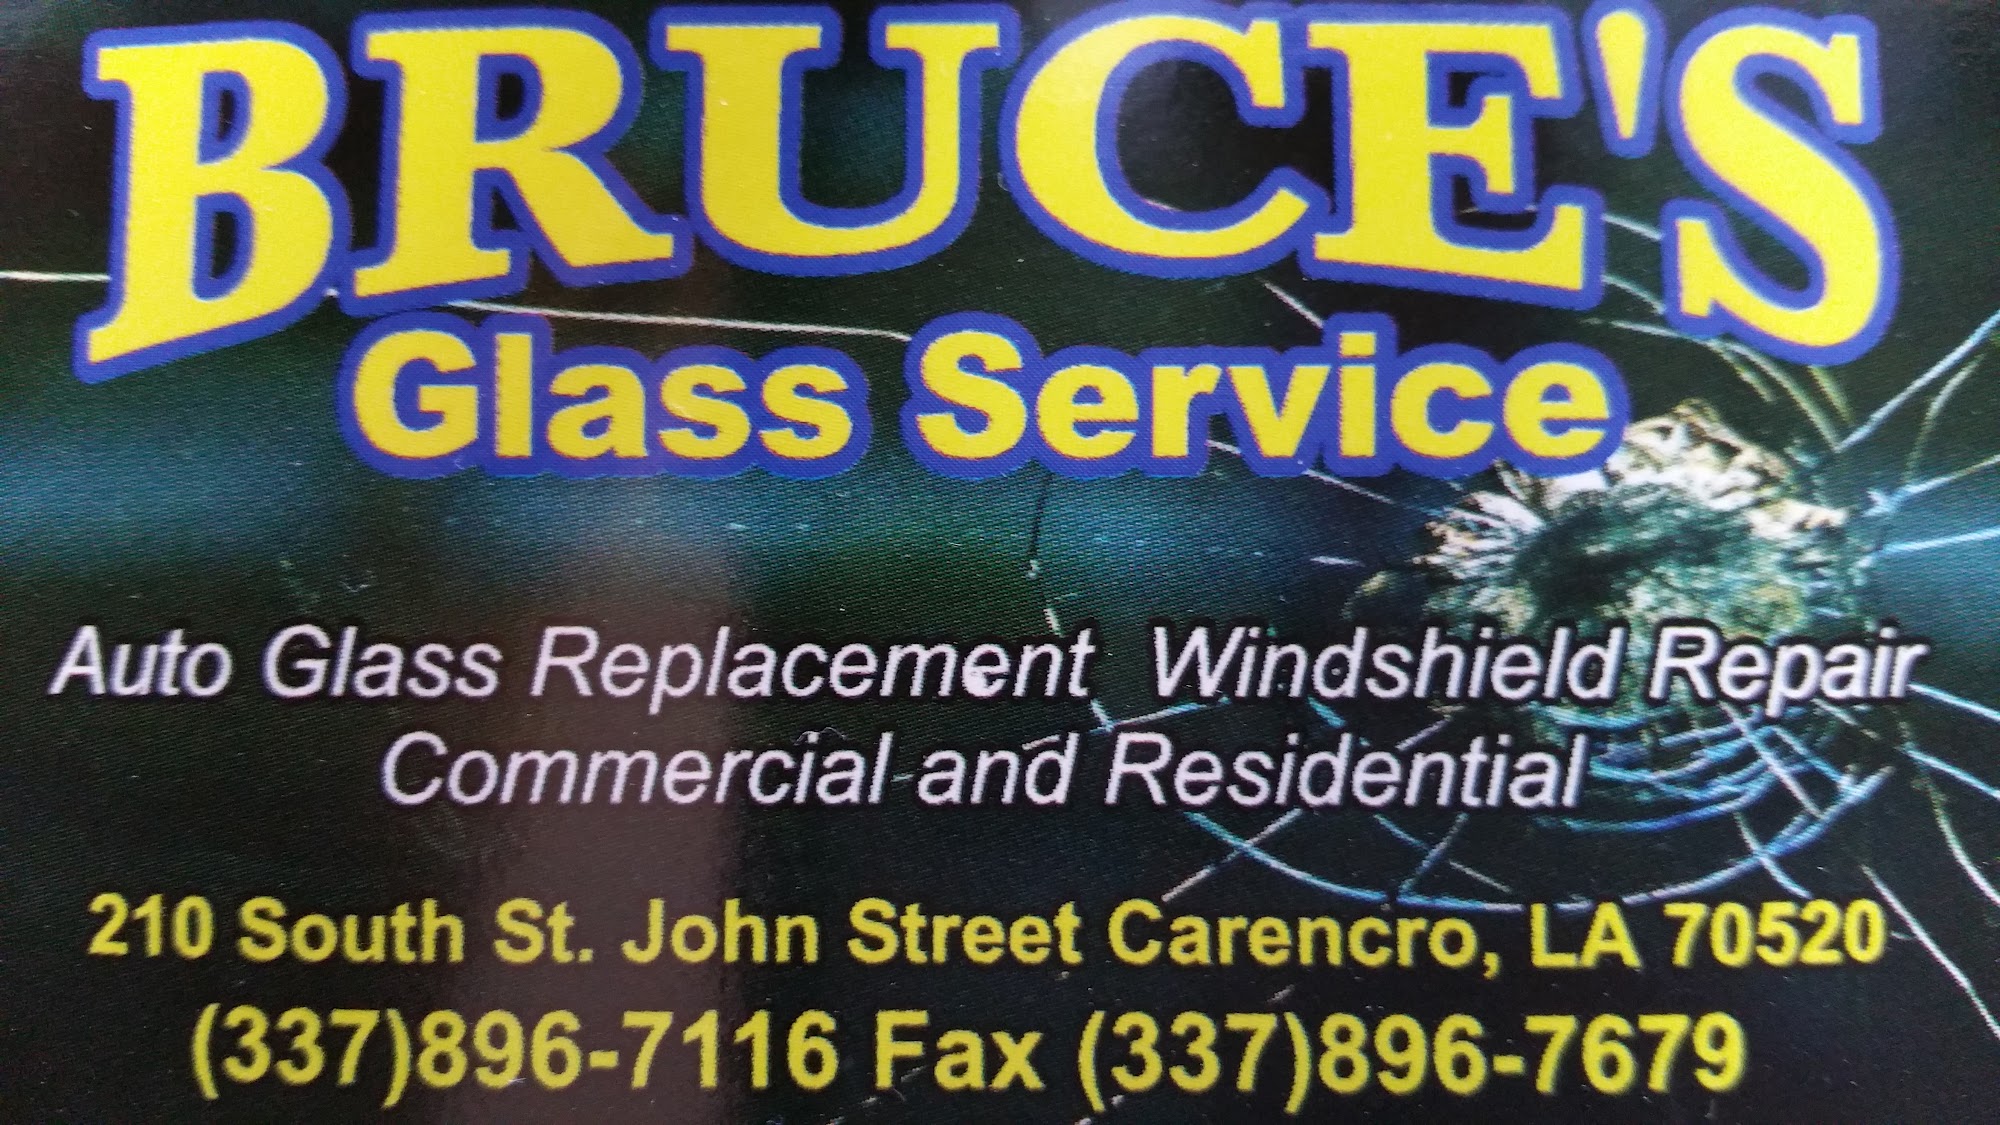 Bruce's Glass Service